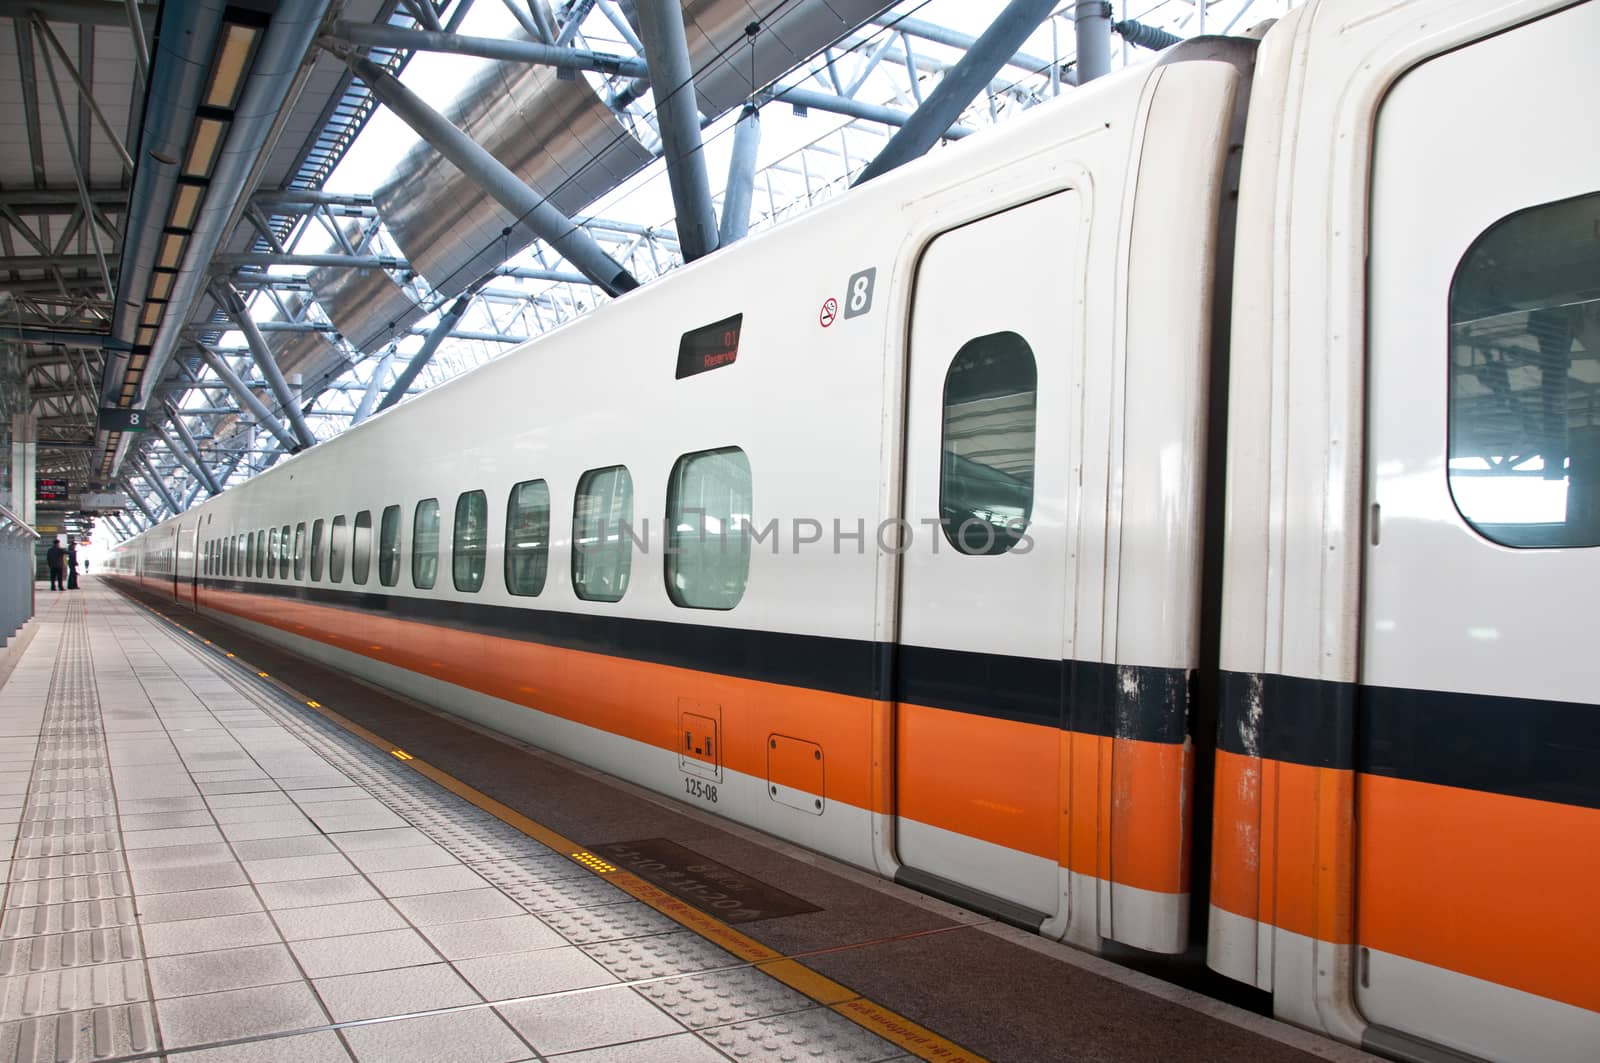 Taiwan High Speed Rail train carriage by eyeofpaul